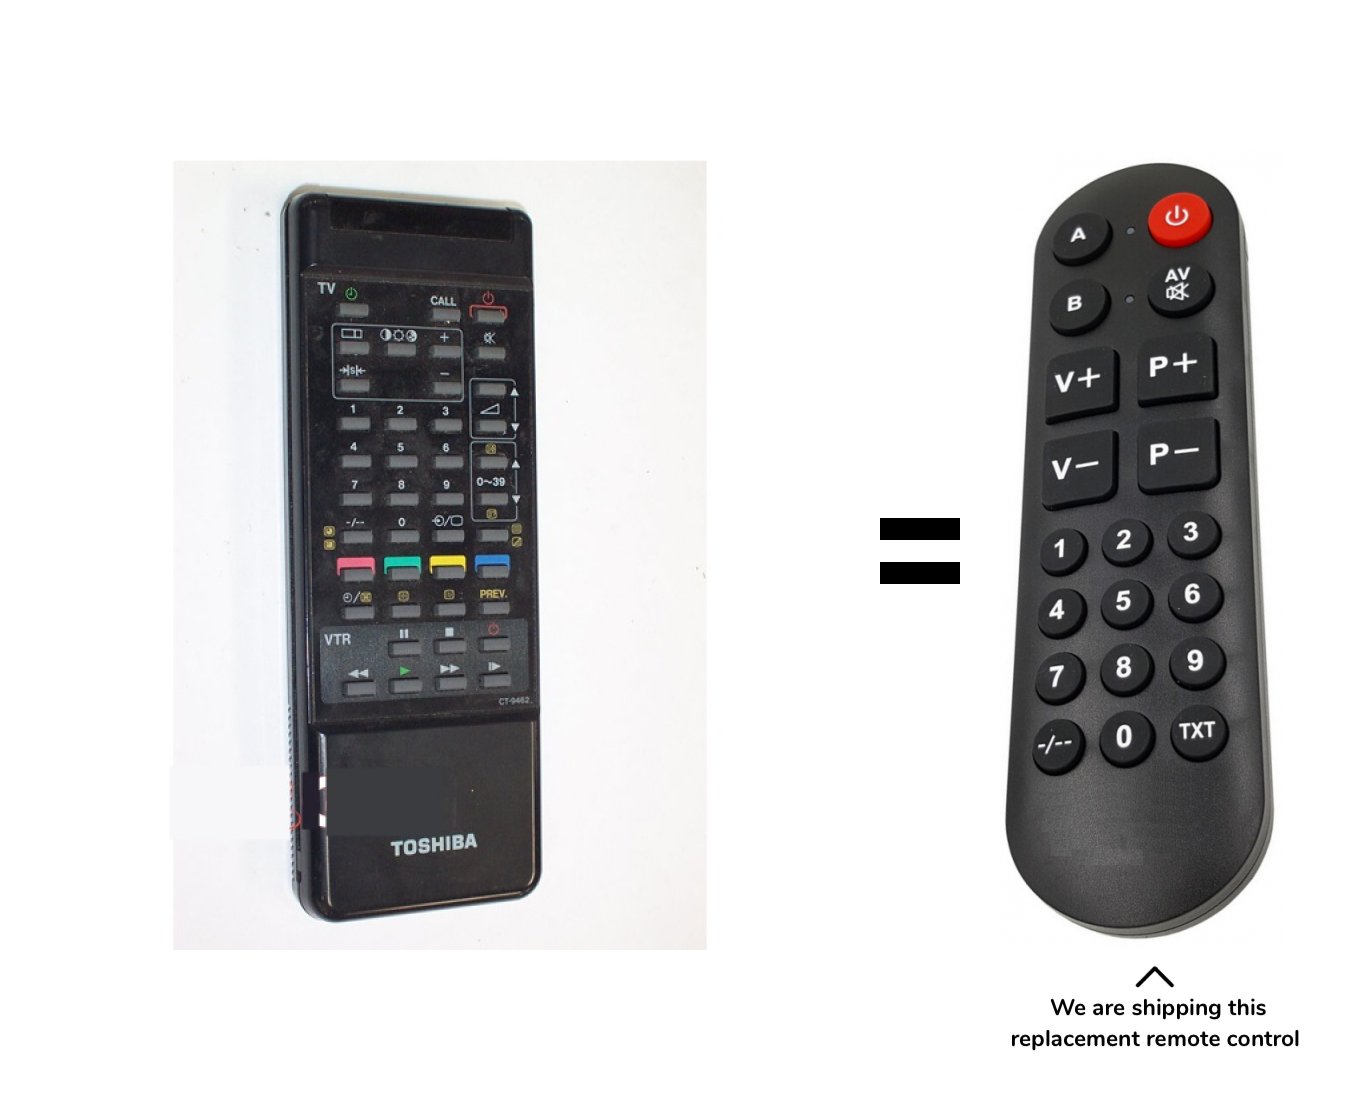 Toshiba CT-9384 remote control for seniors